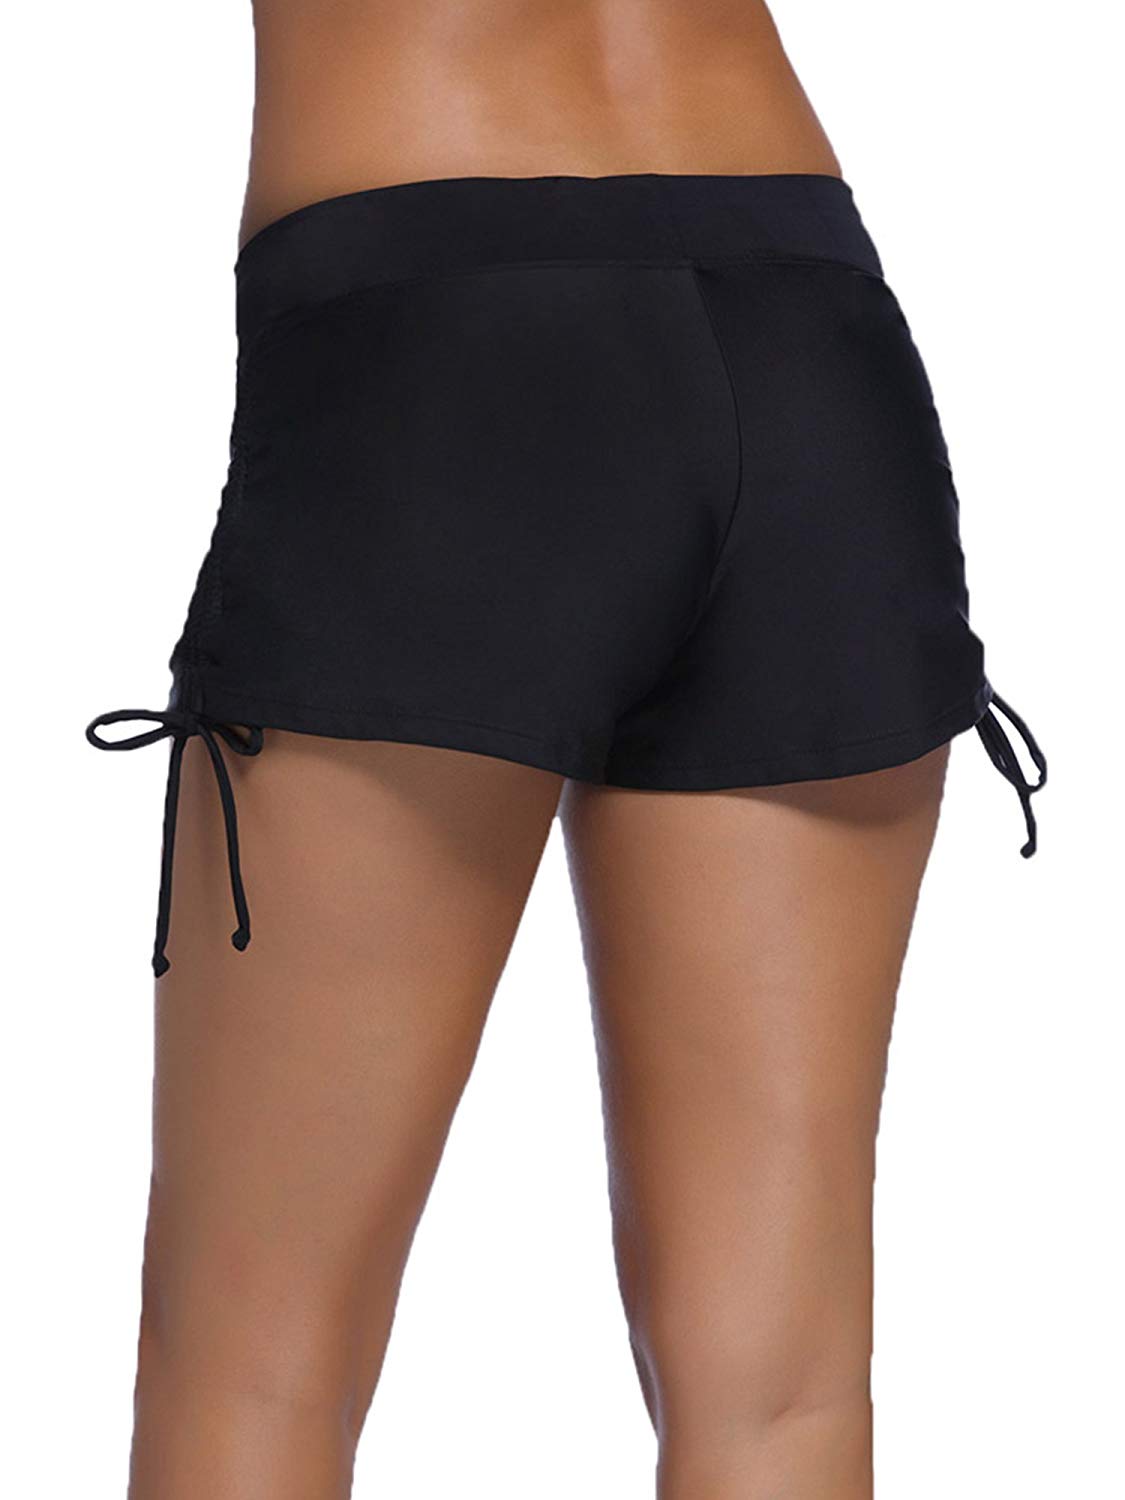 Hestya Women's Swim Shorts Solid Swimsuit Bottoms Quick Dry, Black ...